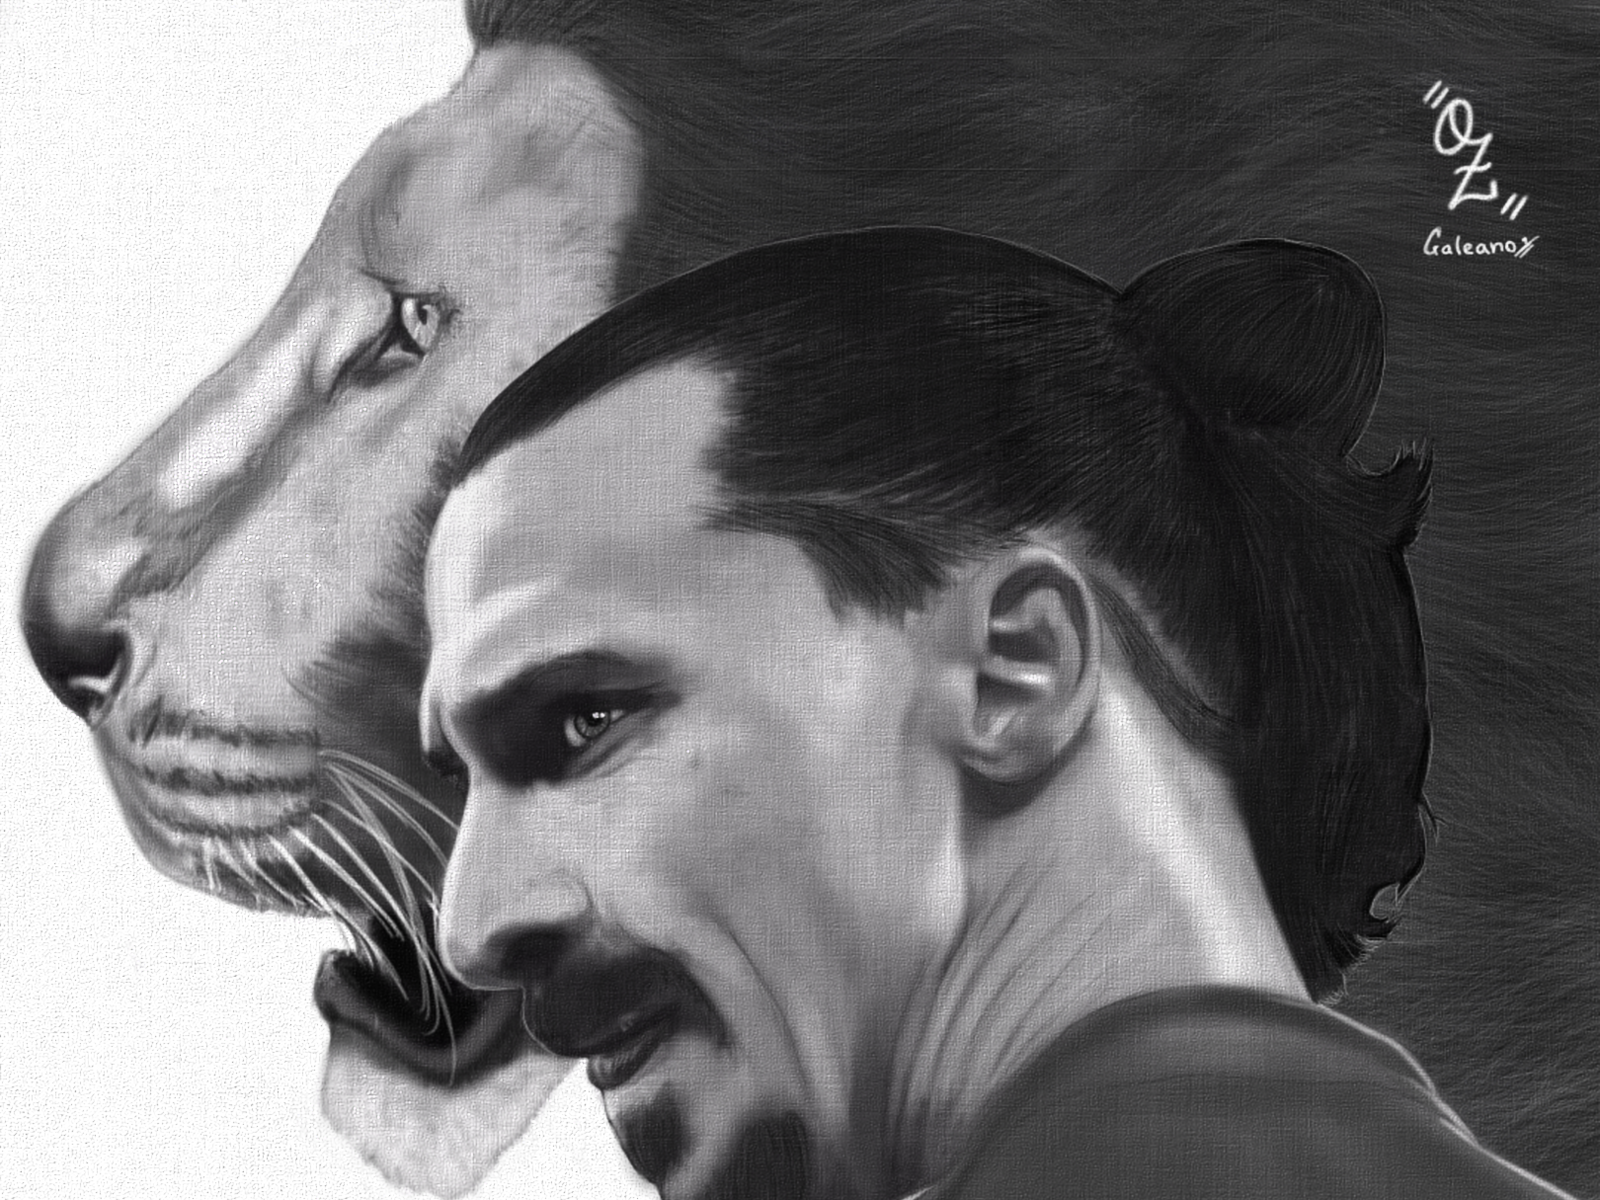 Zlatan Ibrahimović coloring book enjoys goal to print and online